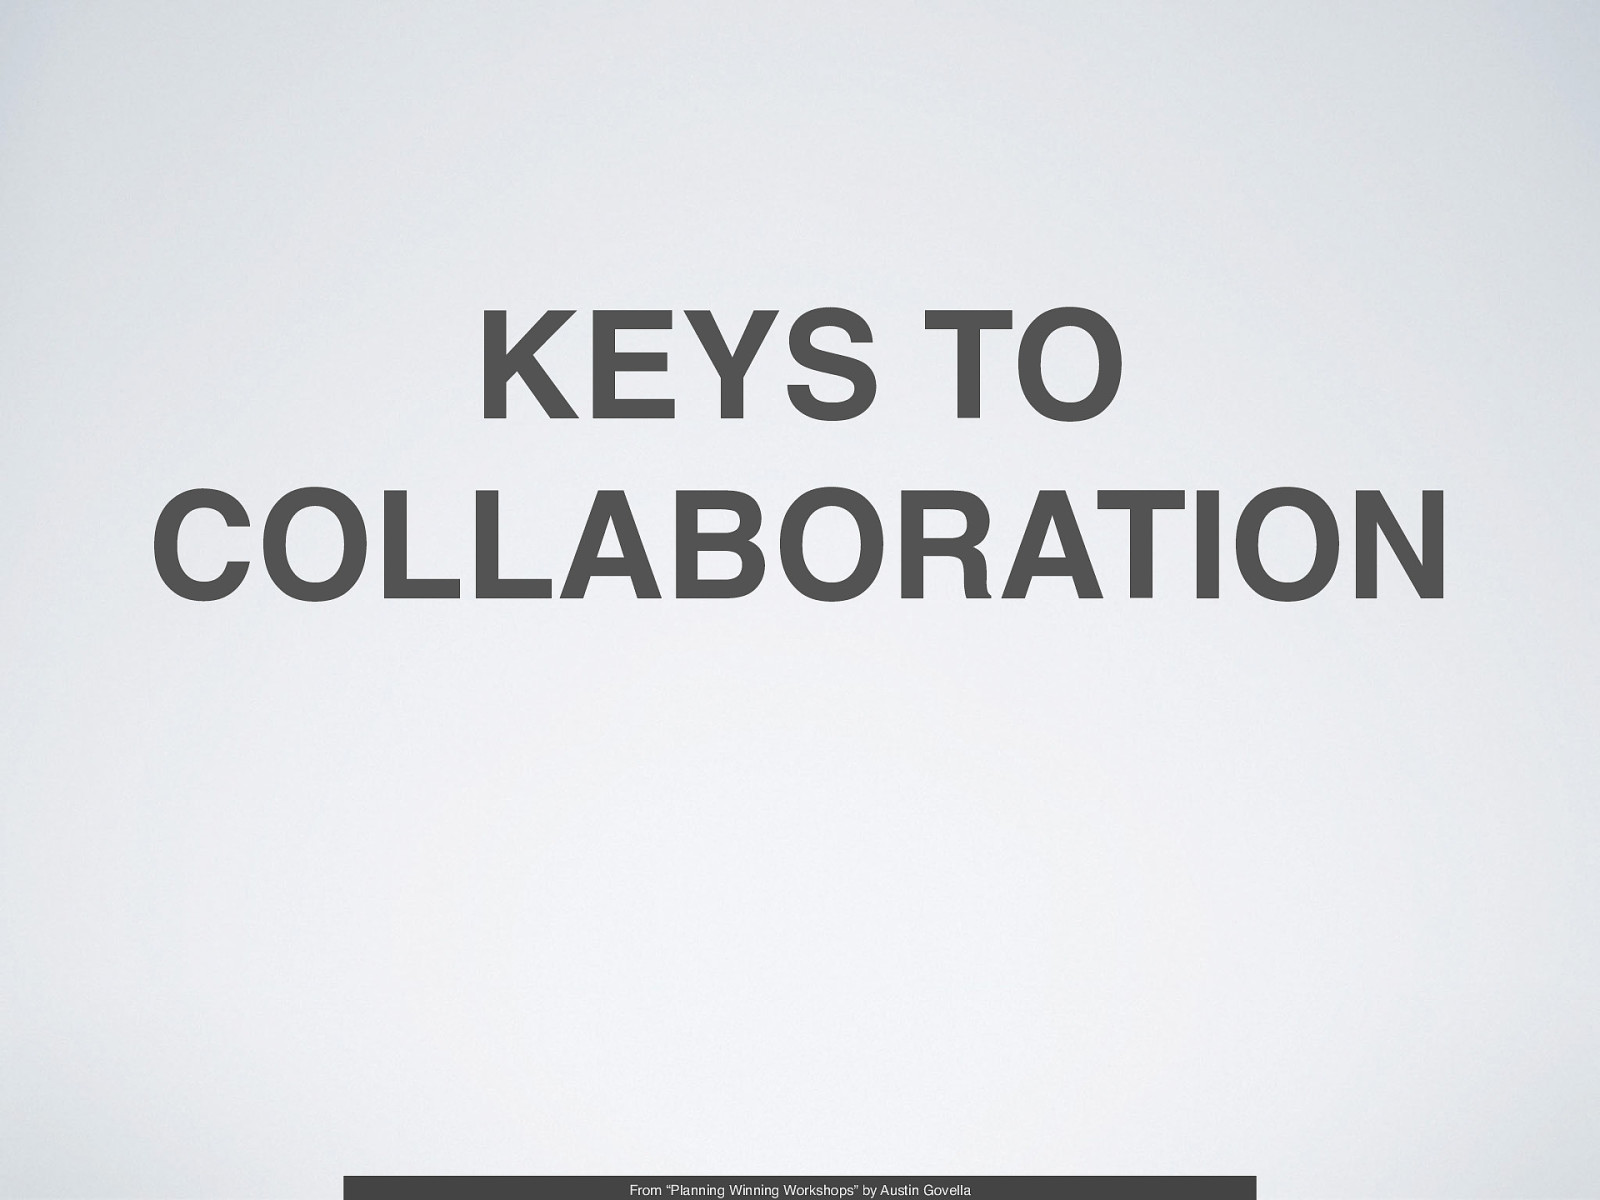 Keys to collaboration